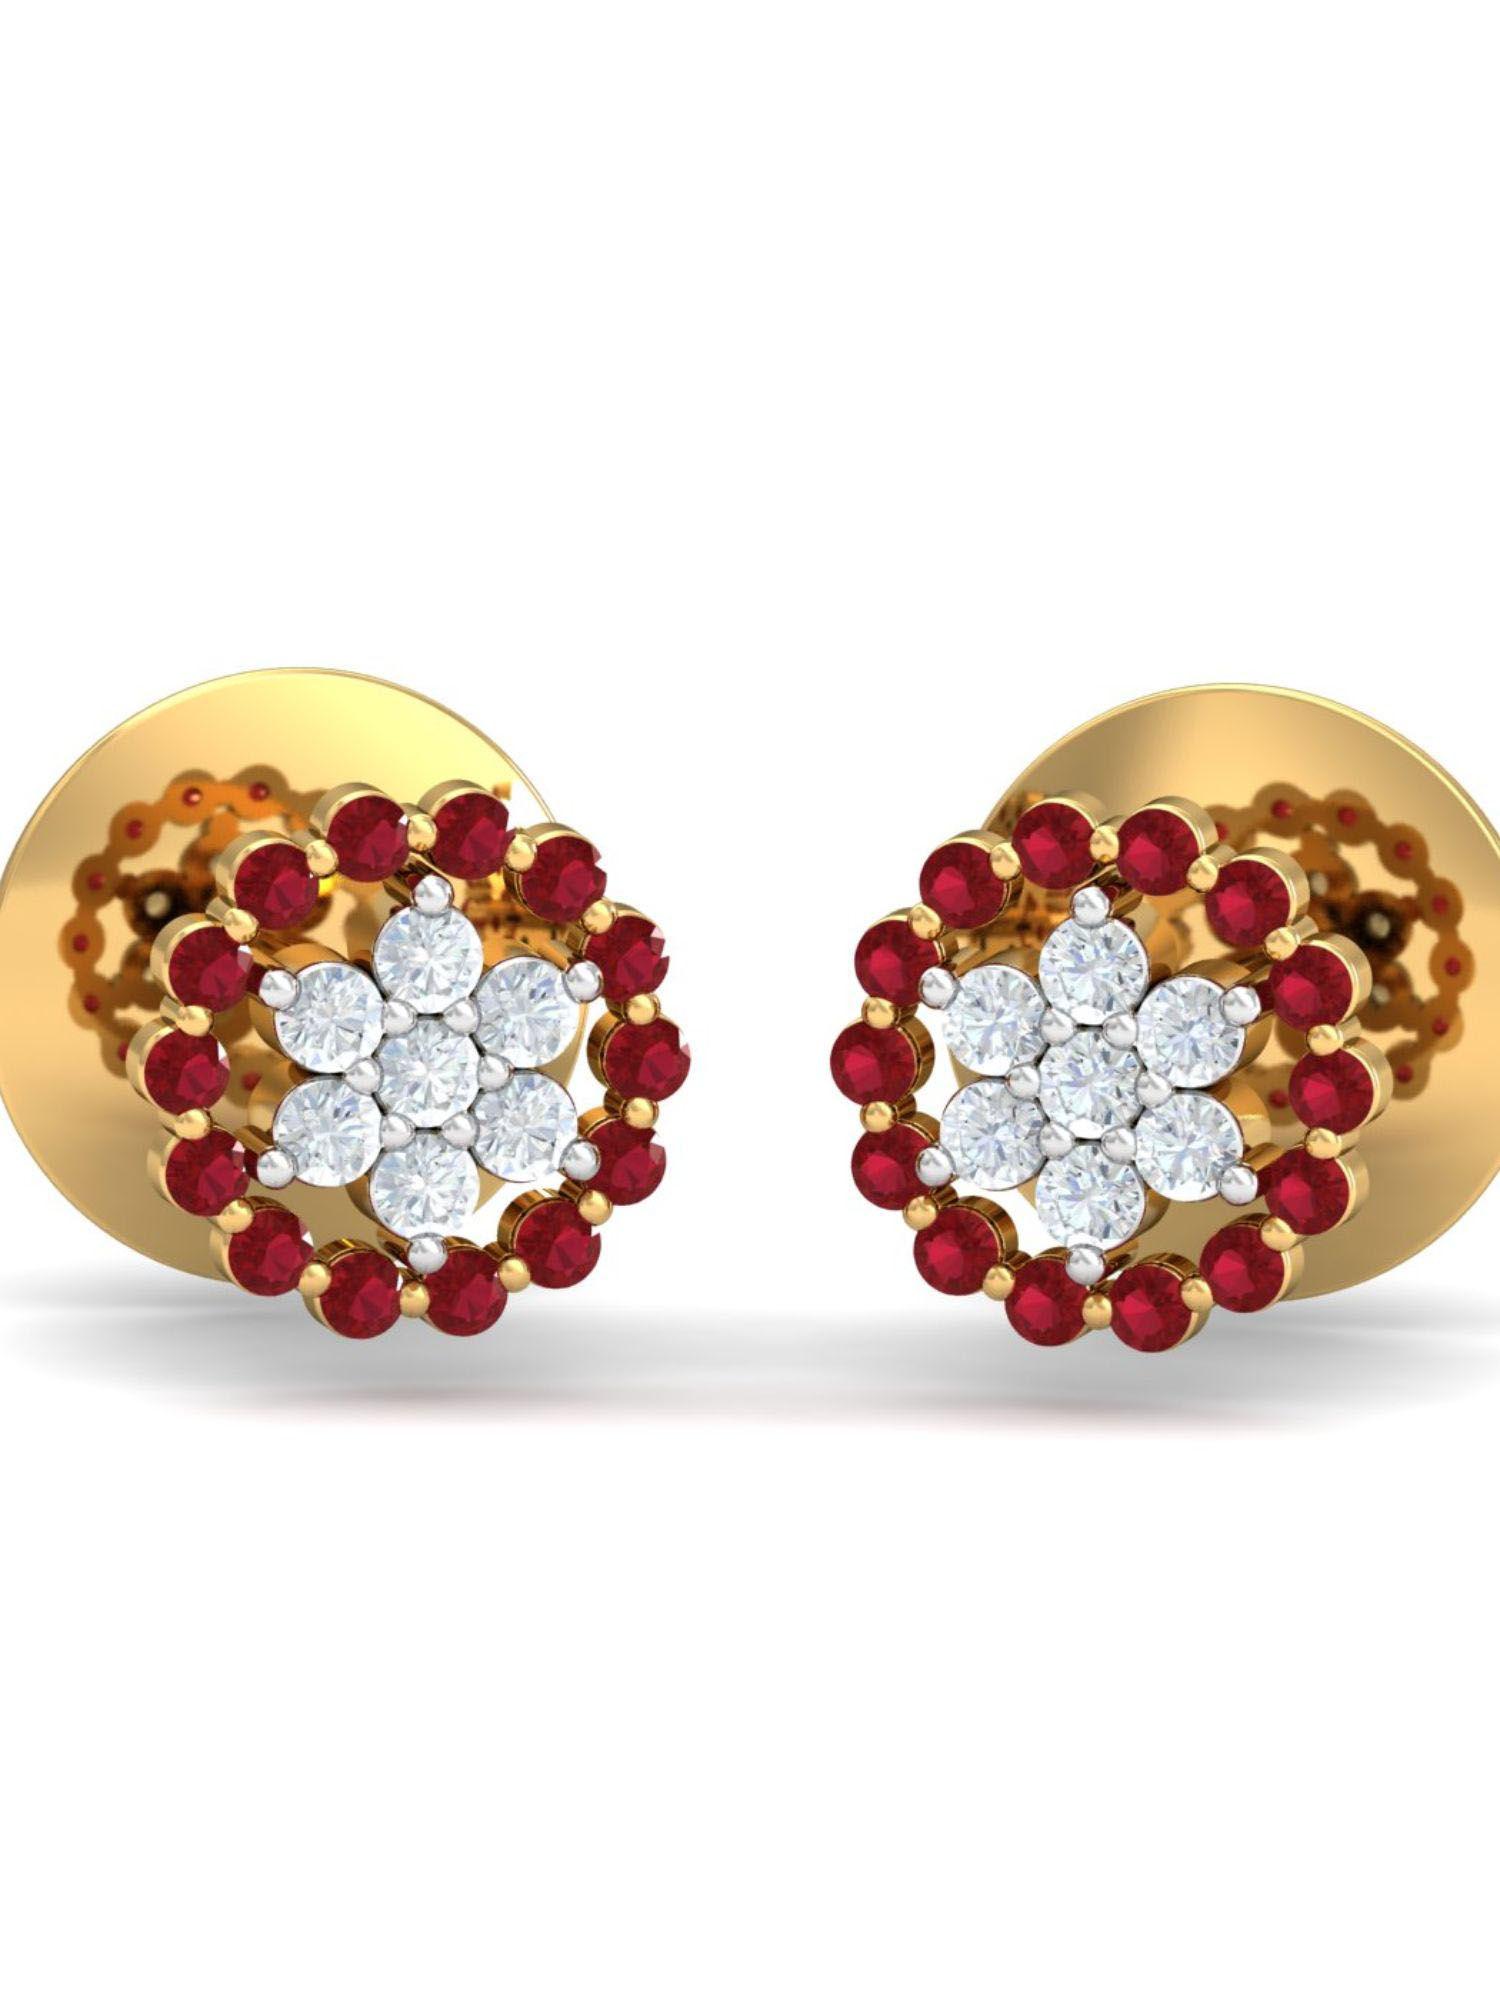 18k anahi classic ruby stud earrings for women and girls